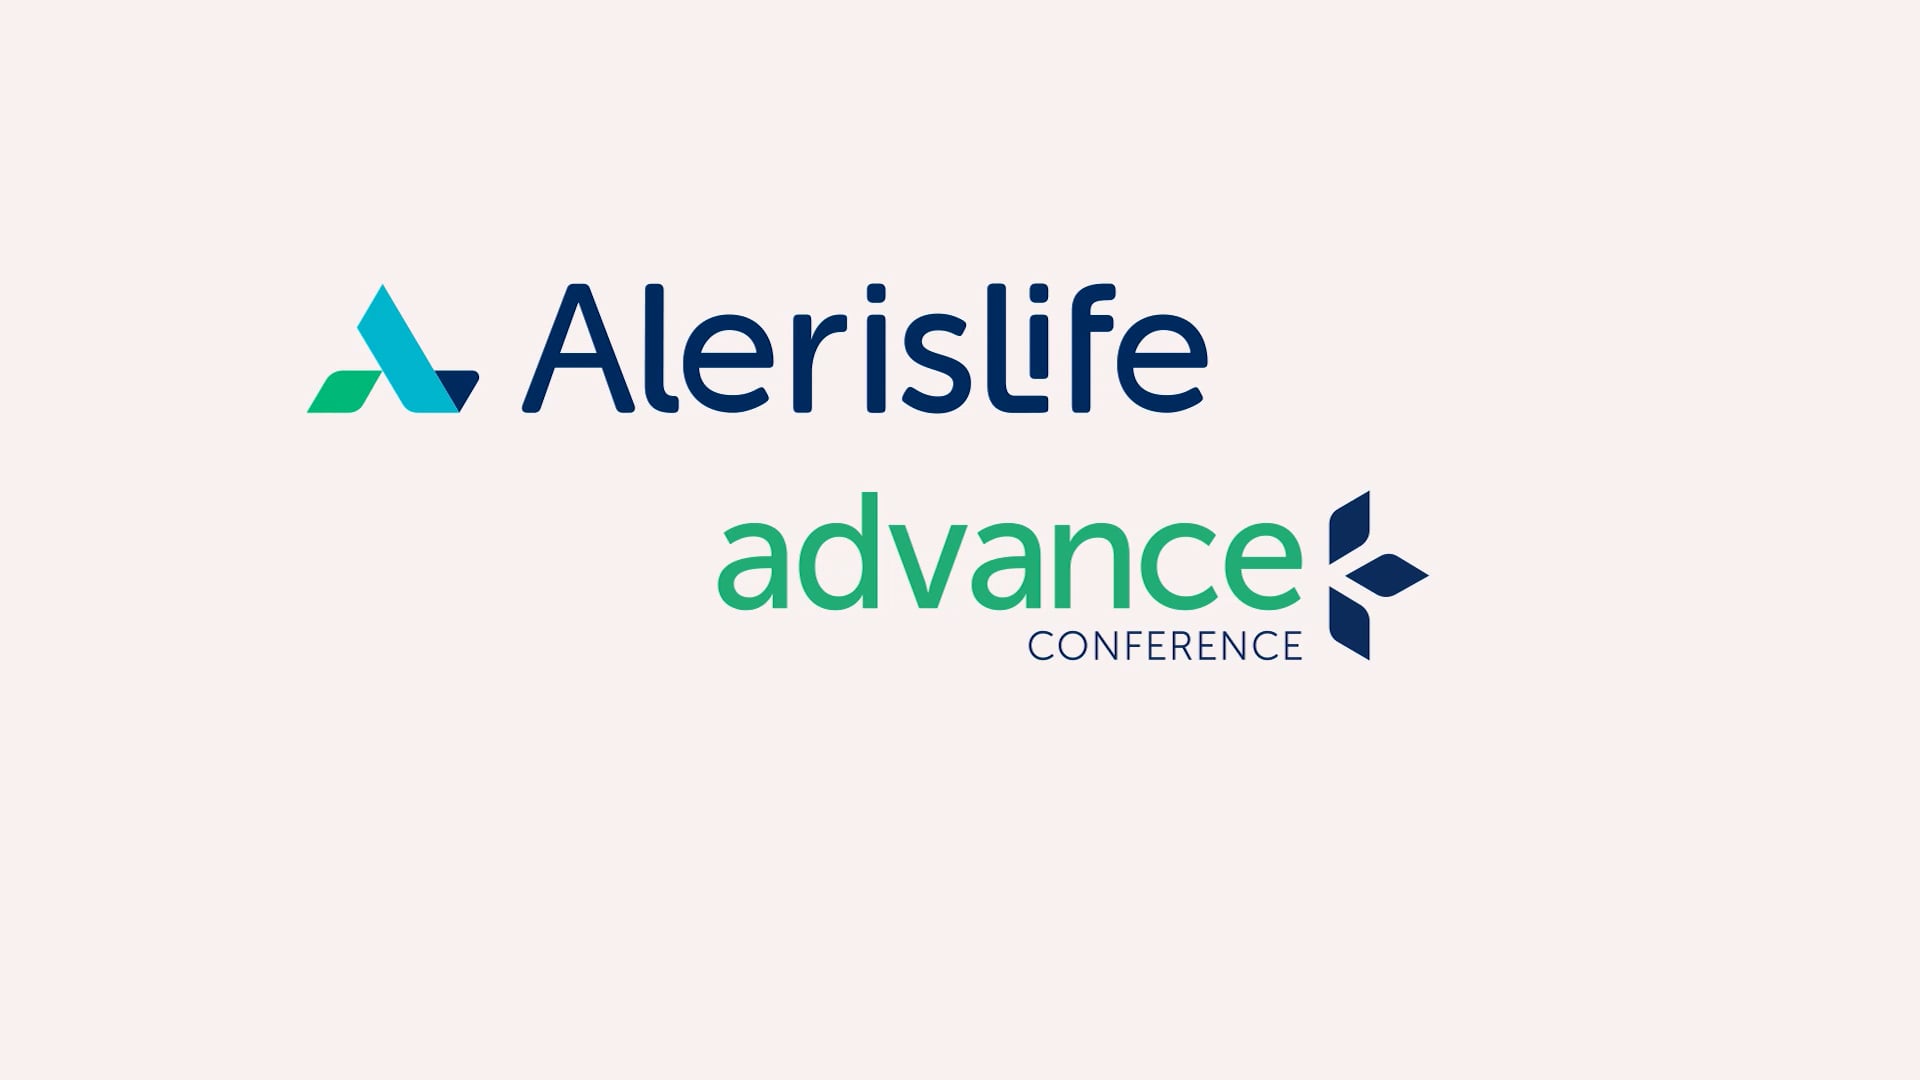 alerislife-advanceconference-session2-segment2-on-vimeo